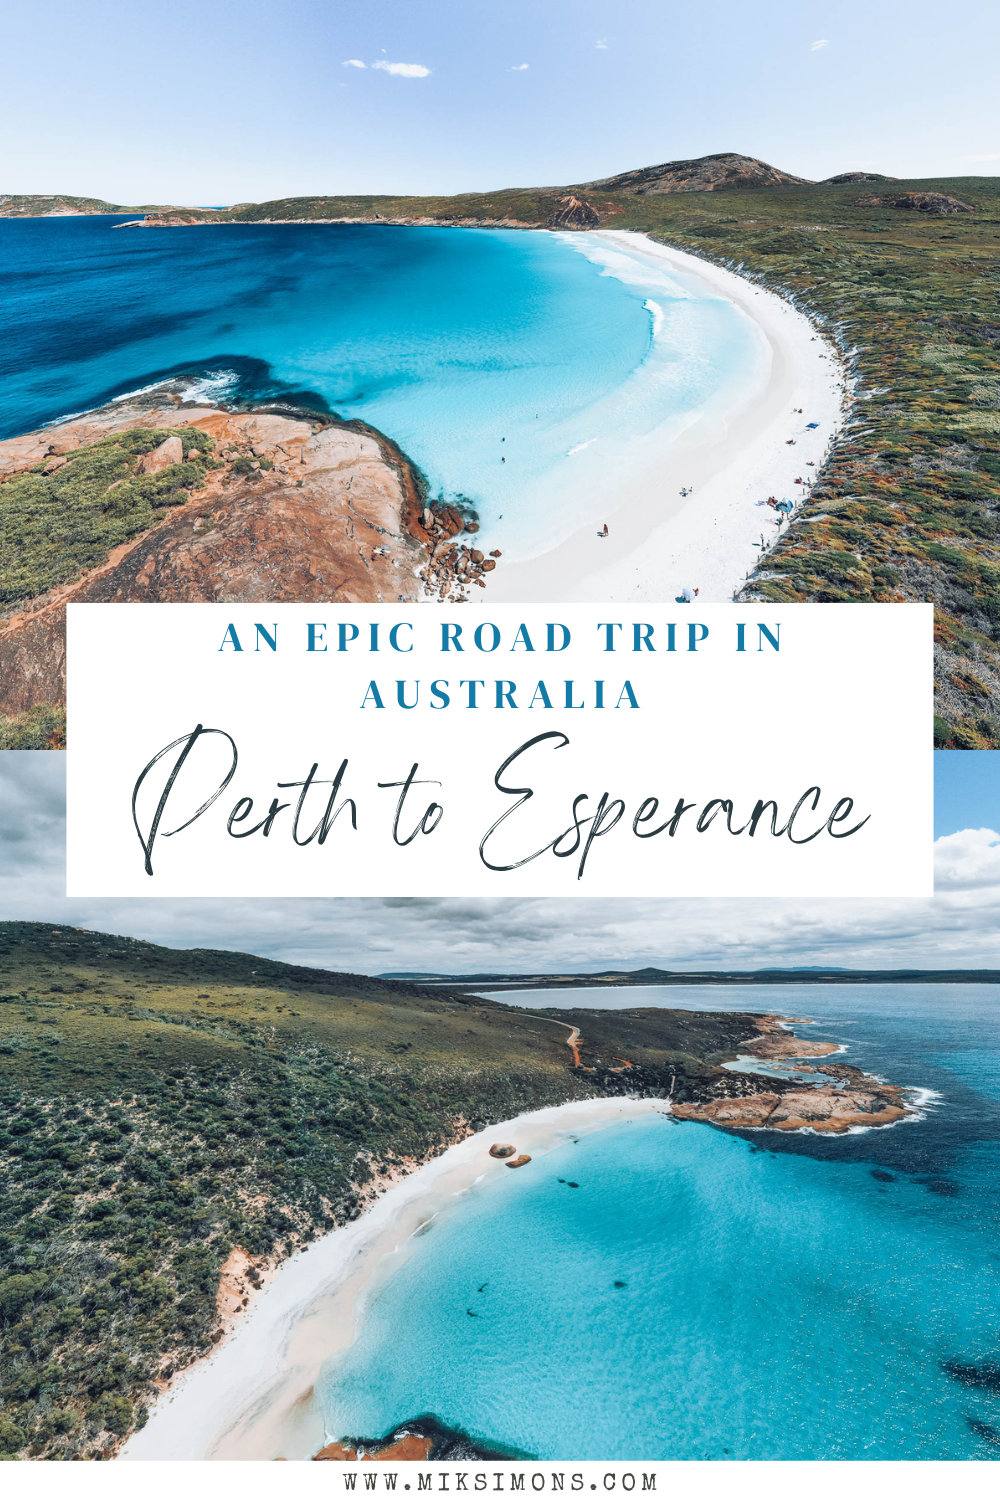 Perth to Esperance - n epic road trip in Australia2